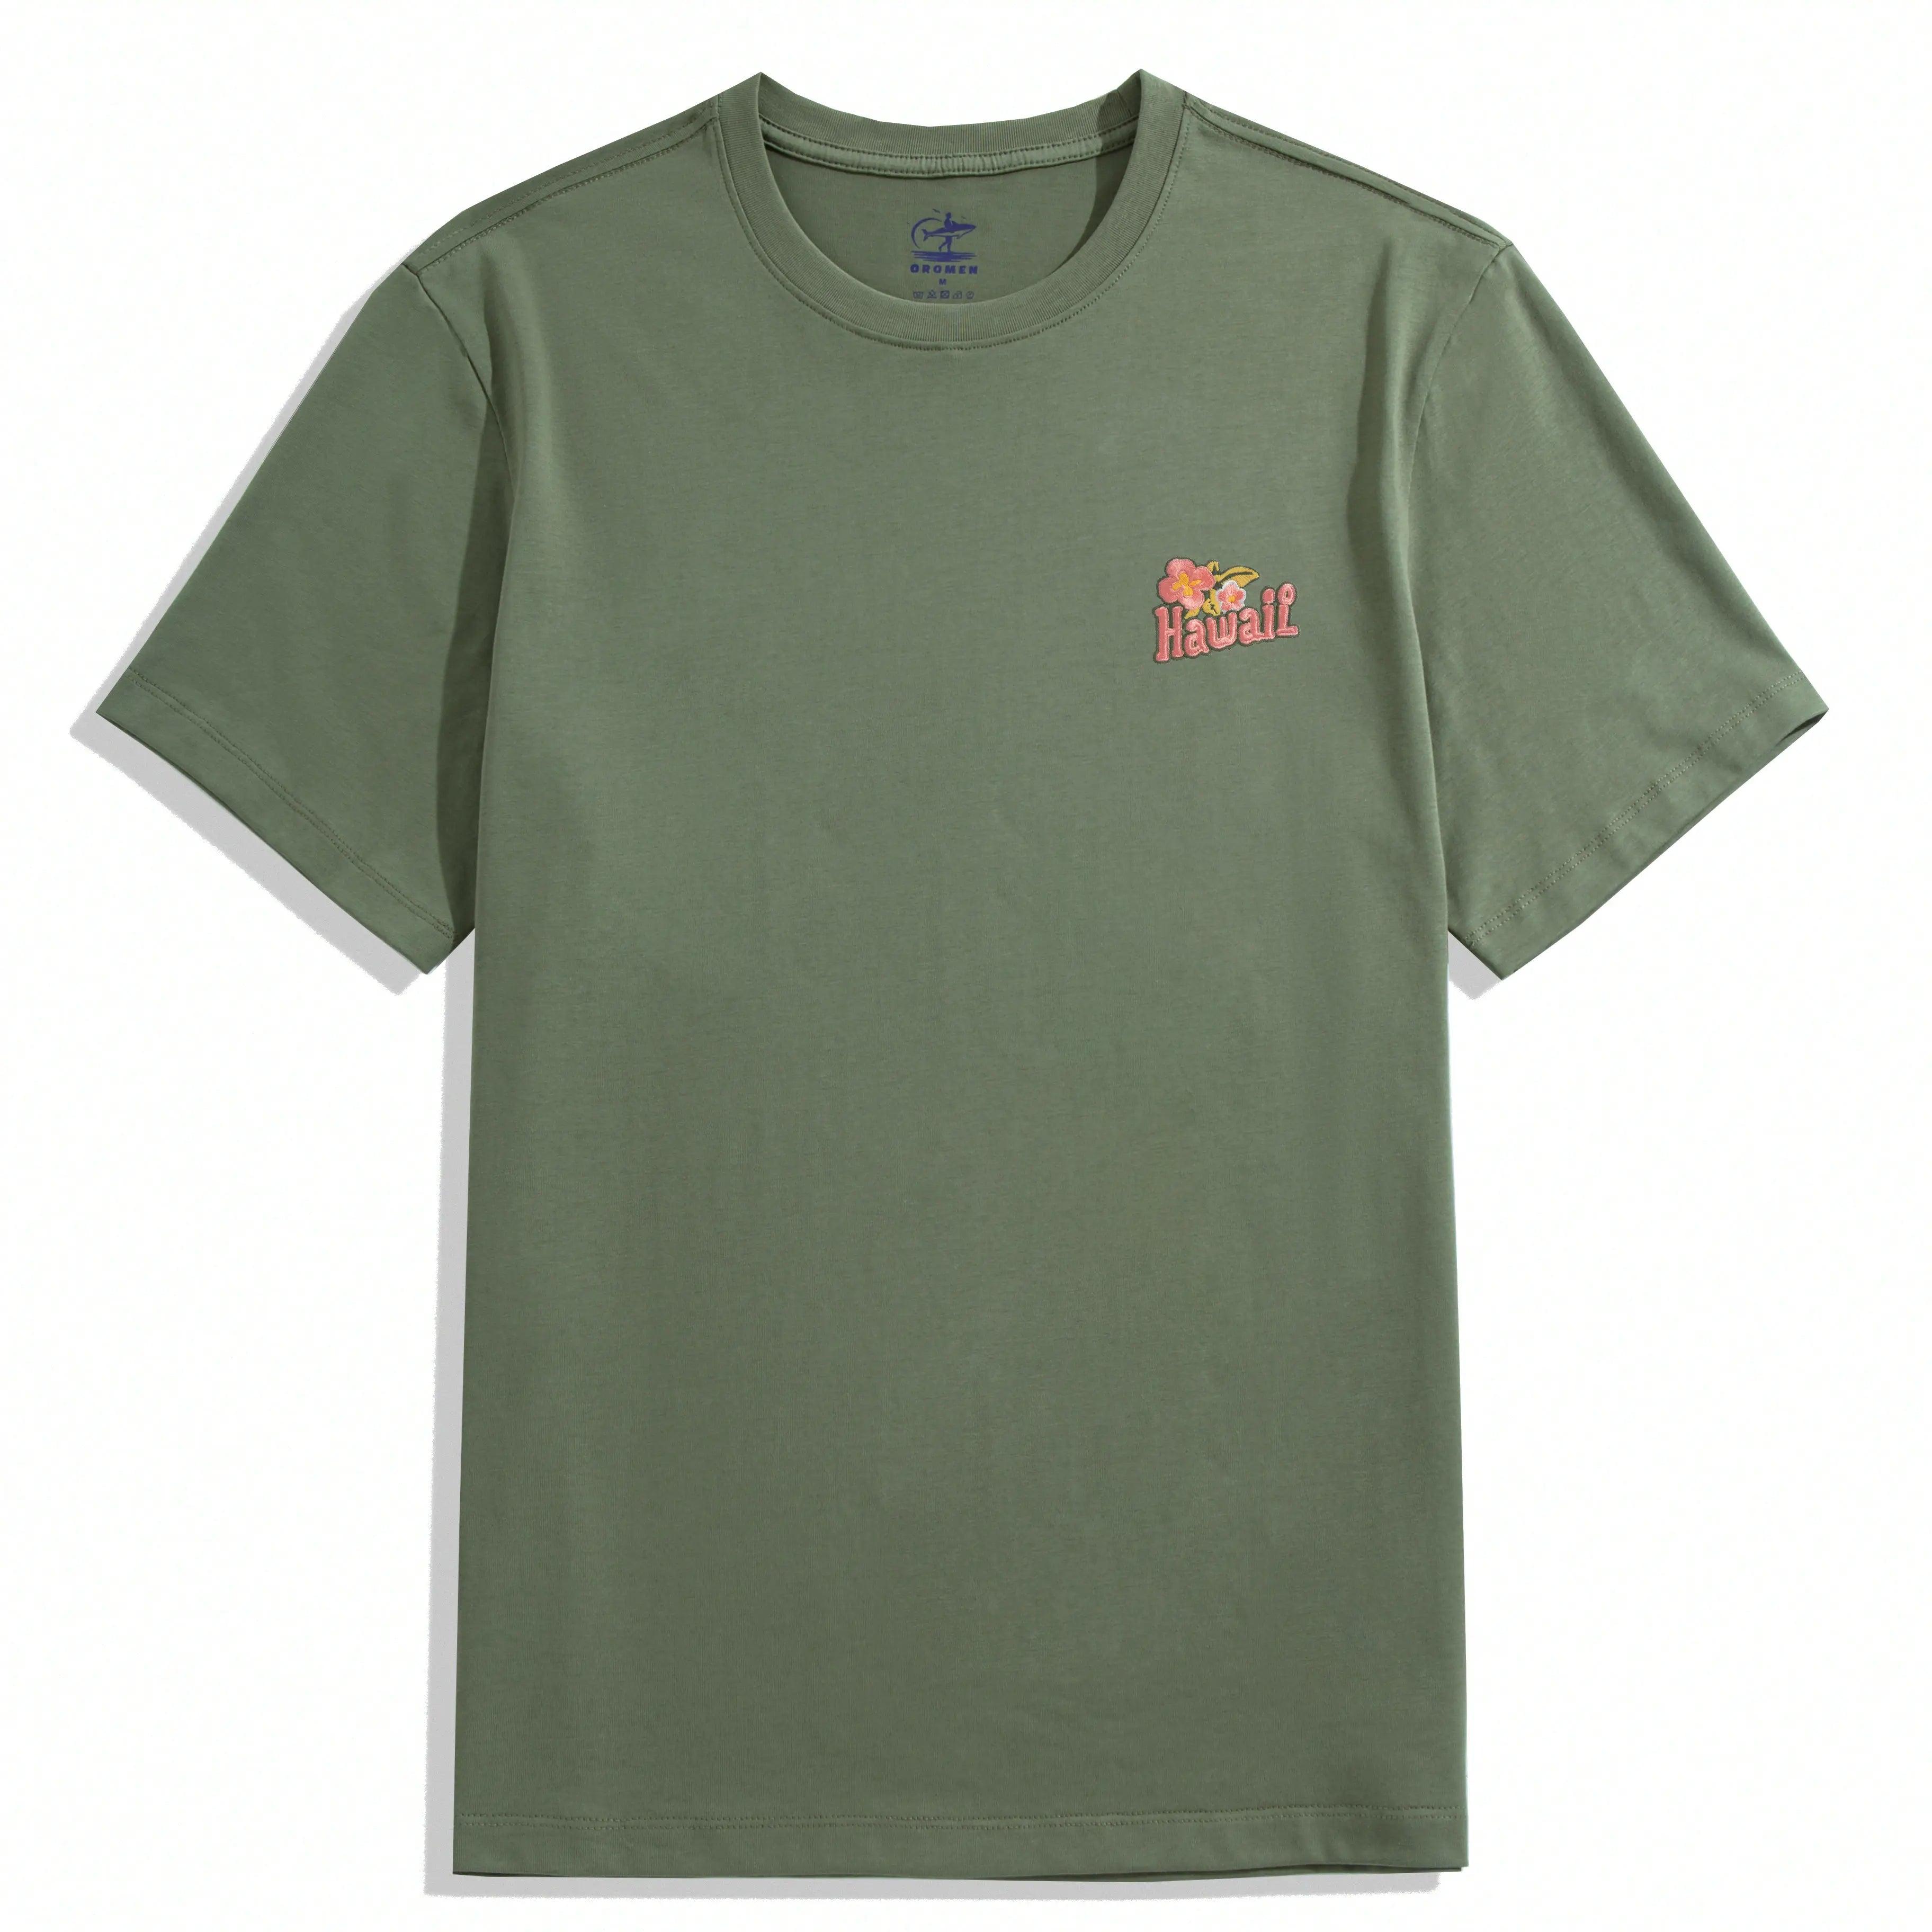 Hawaii Cotton T-shirt Green Color